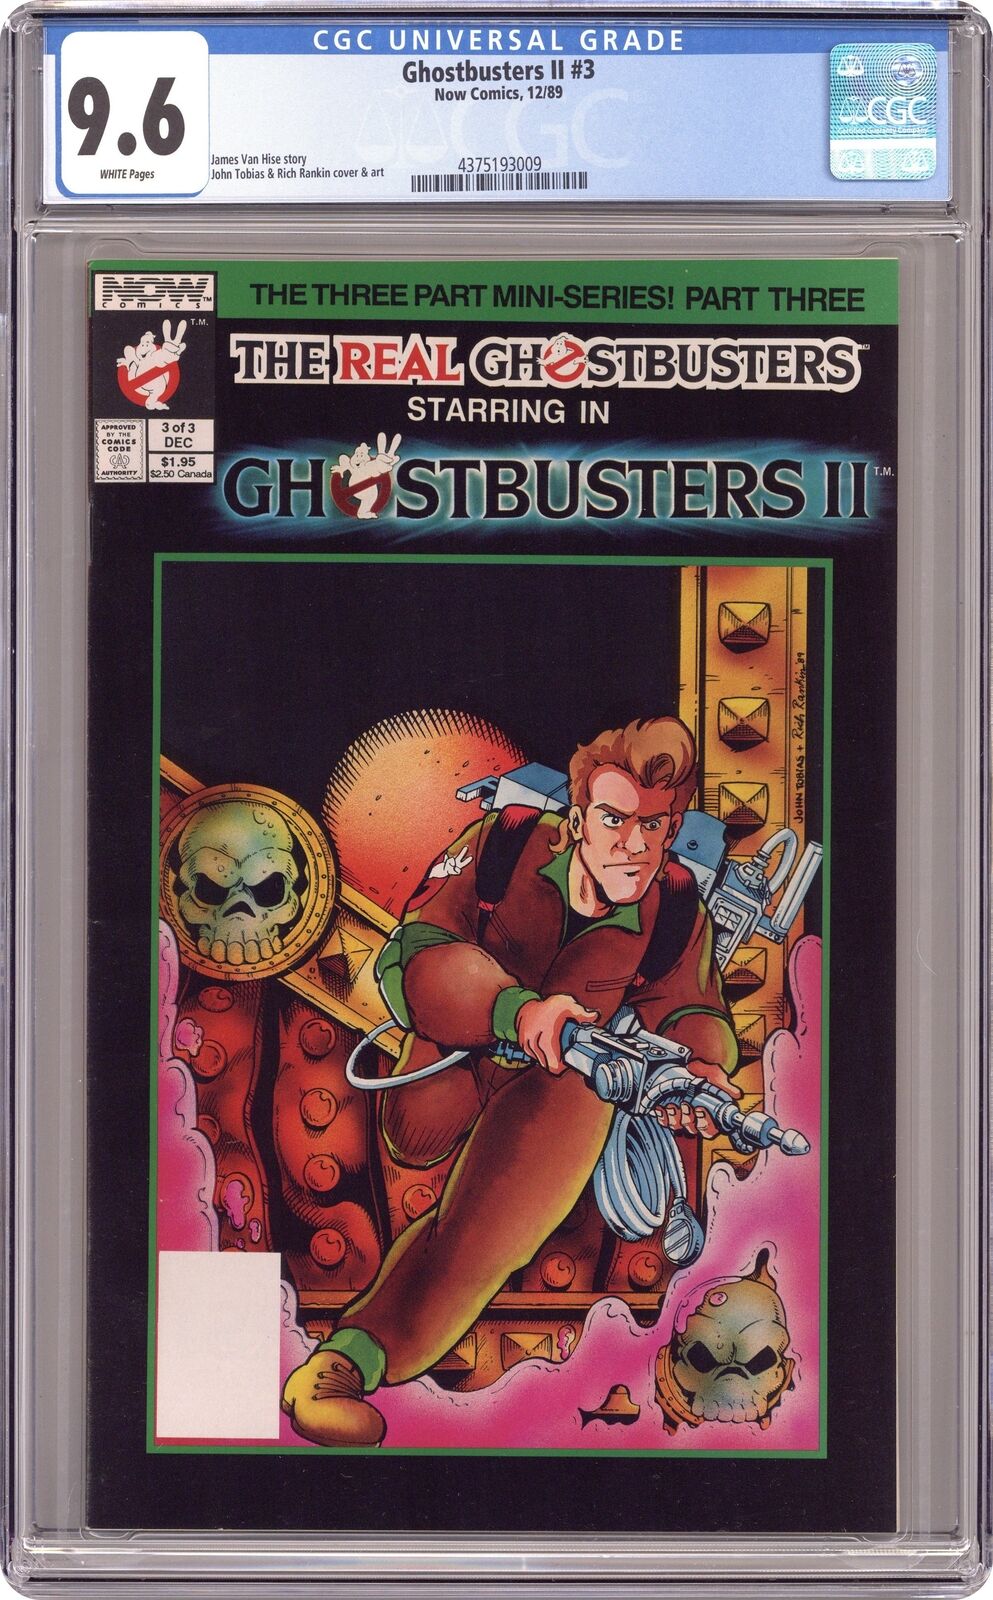 Ghostbusters II #3 CGC 9.6 1989 4375193009